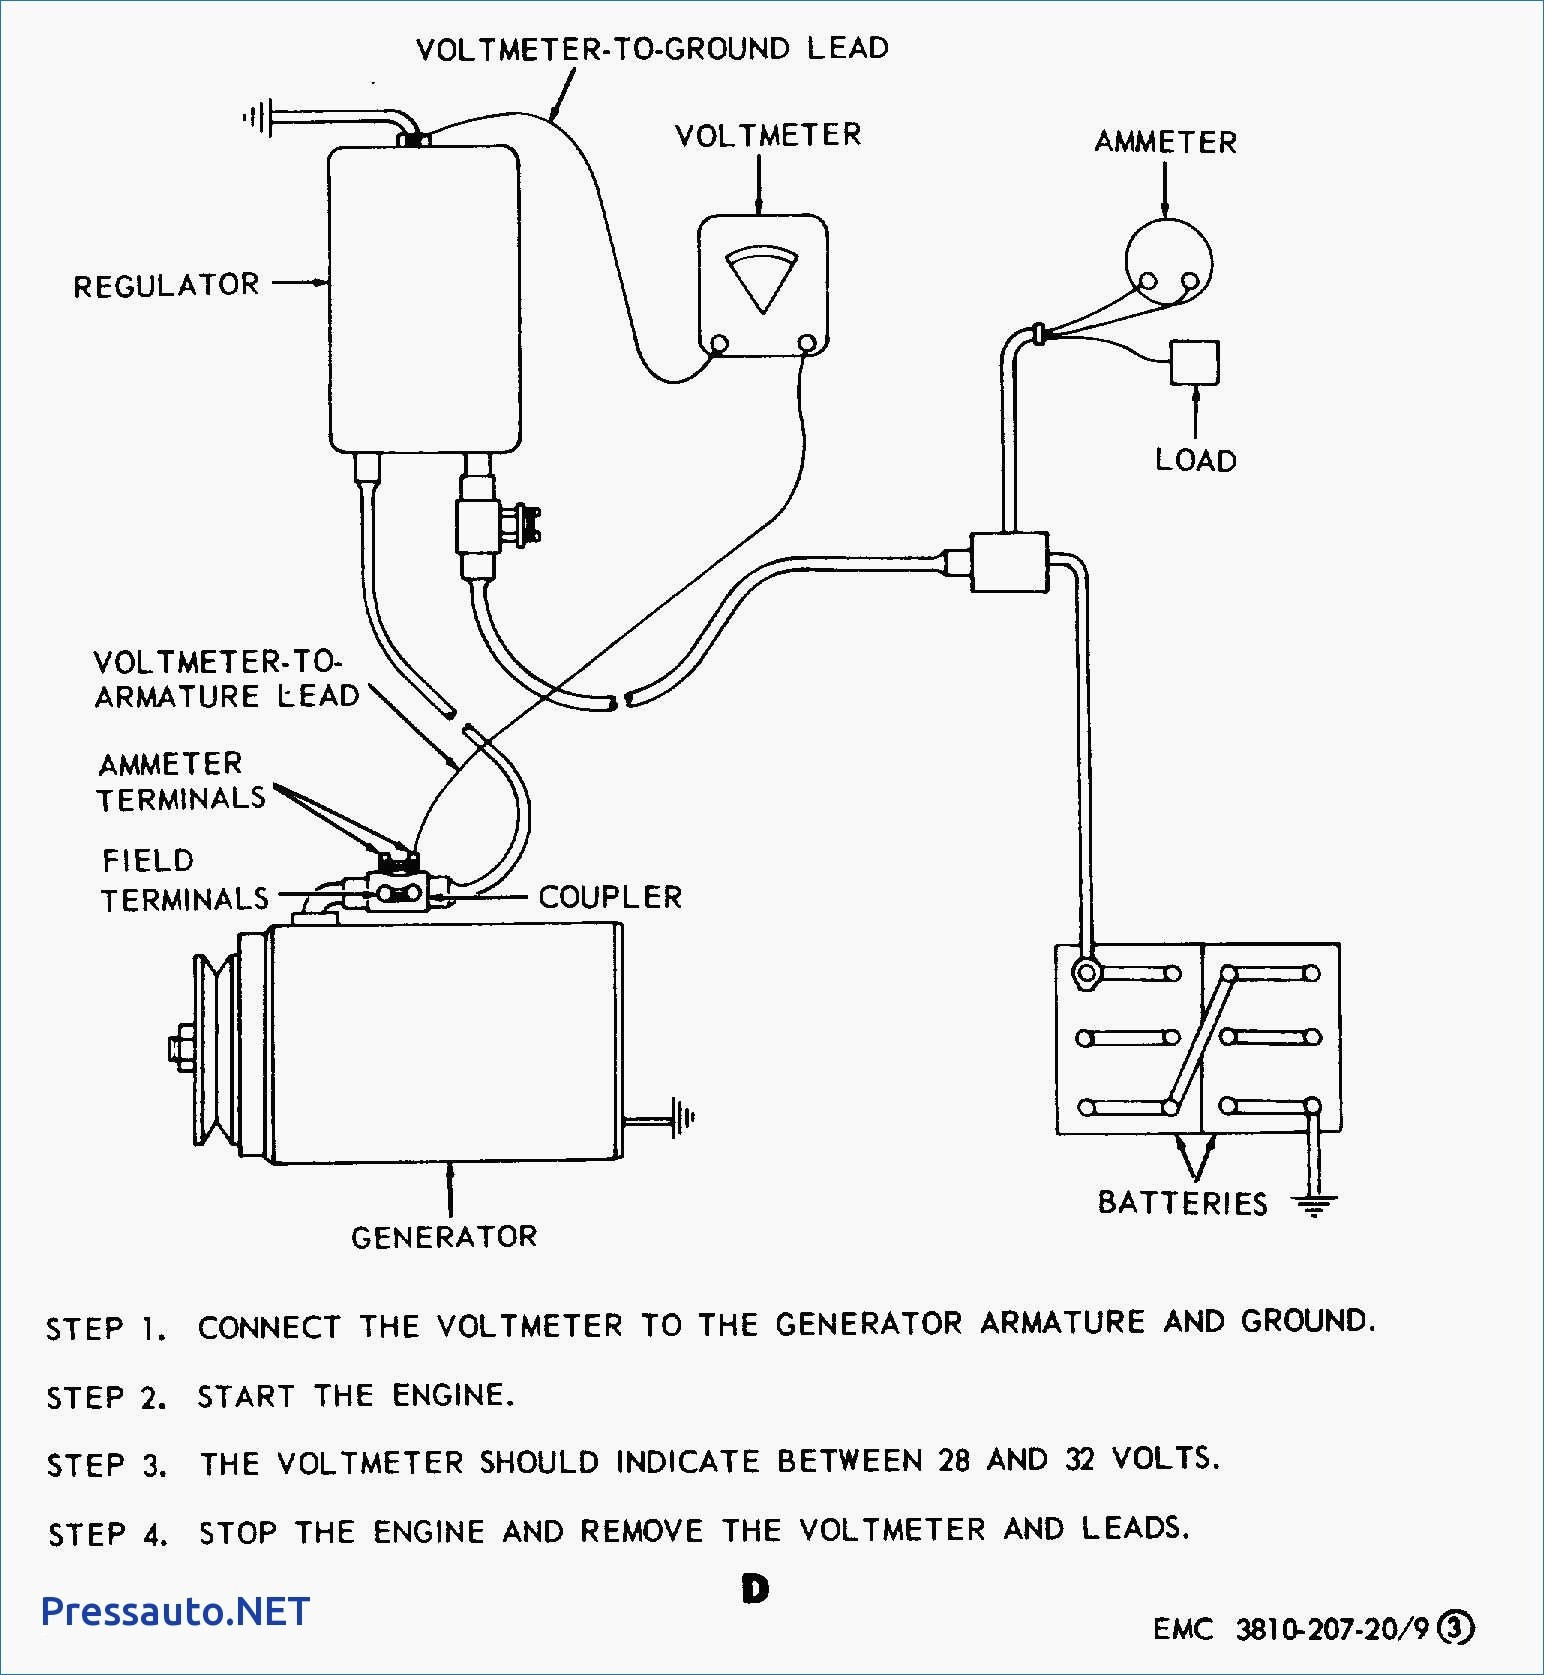 Generator Backfeed Wiring Diagram Elegant Hiw Do I Wire A Circuit - Generator Backfeed Wiring Diagram